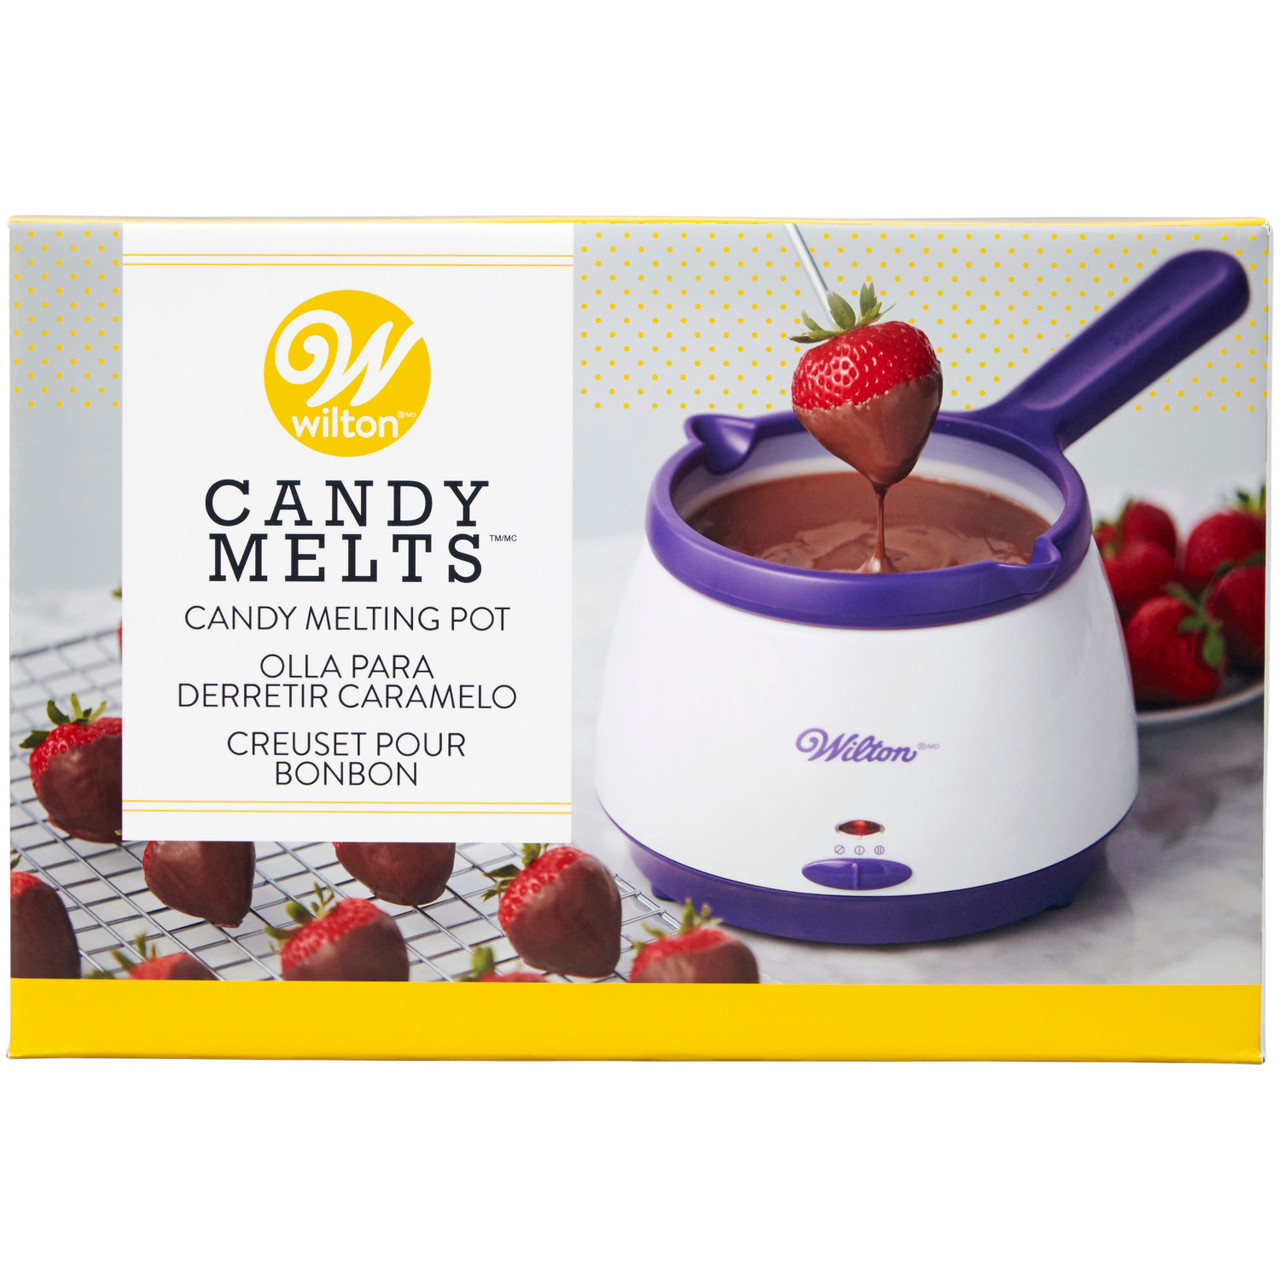  Wilton Candy Melts Candy Melting Pot Only $14.55 (Regularly $27)